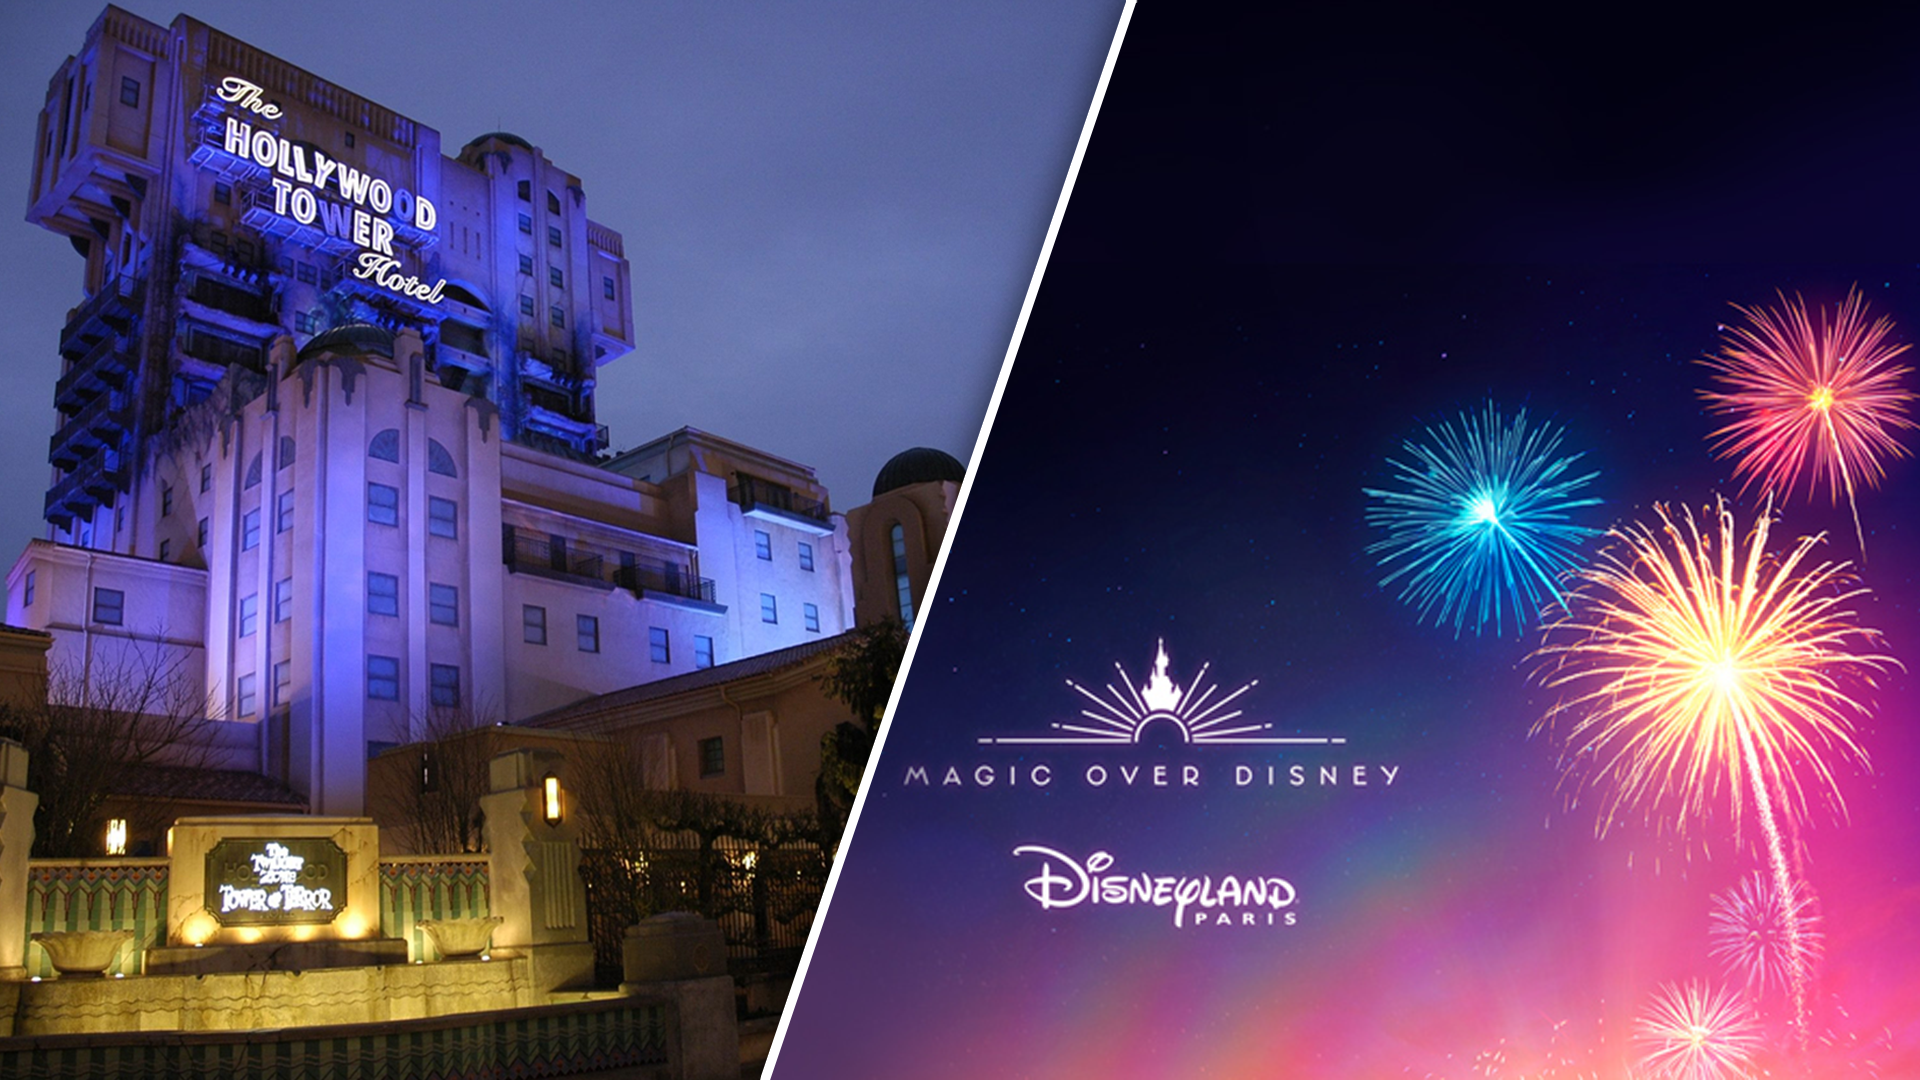 Disneyland Paris' new show Magic Over Disney